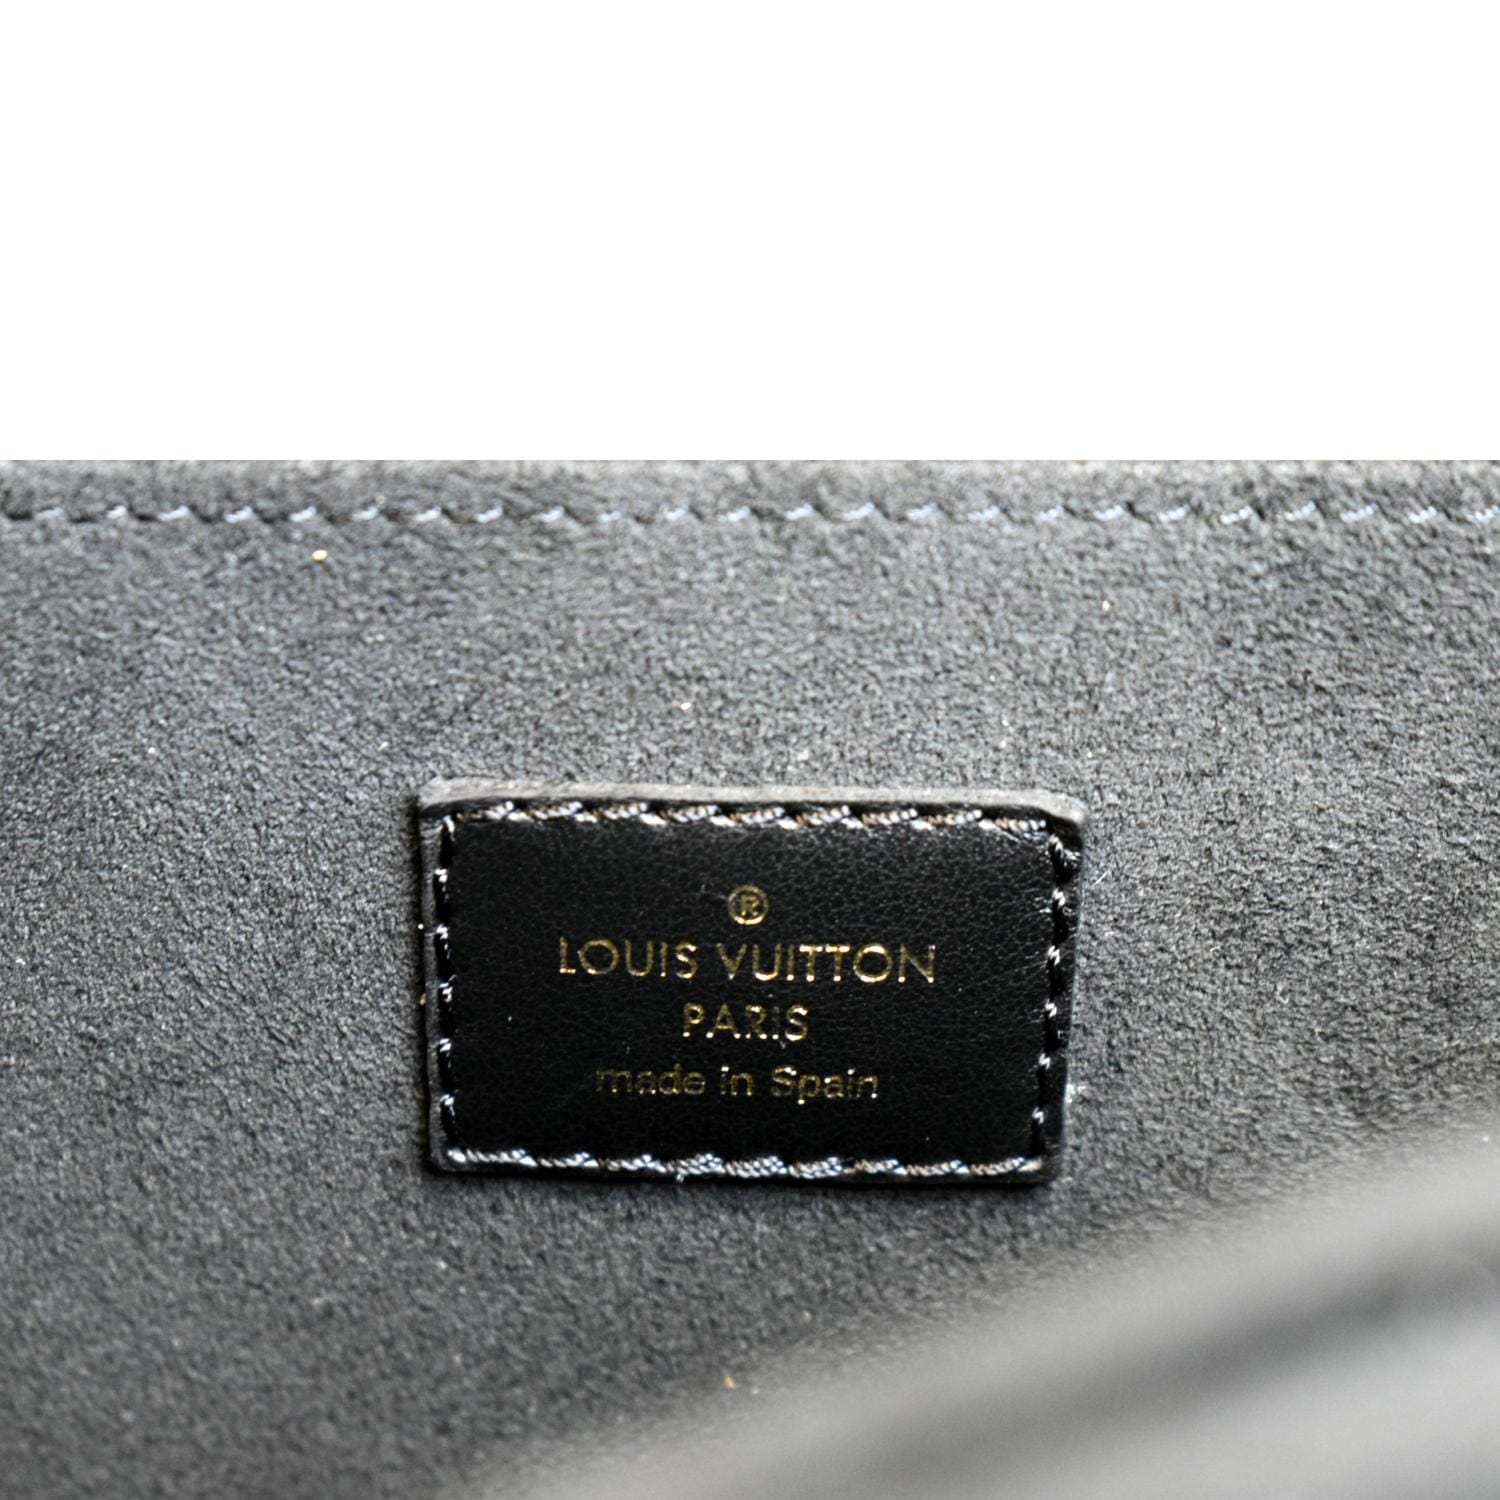 Louis Vuitton, Bags, Louis Vuitton Dauphine Bag